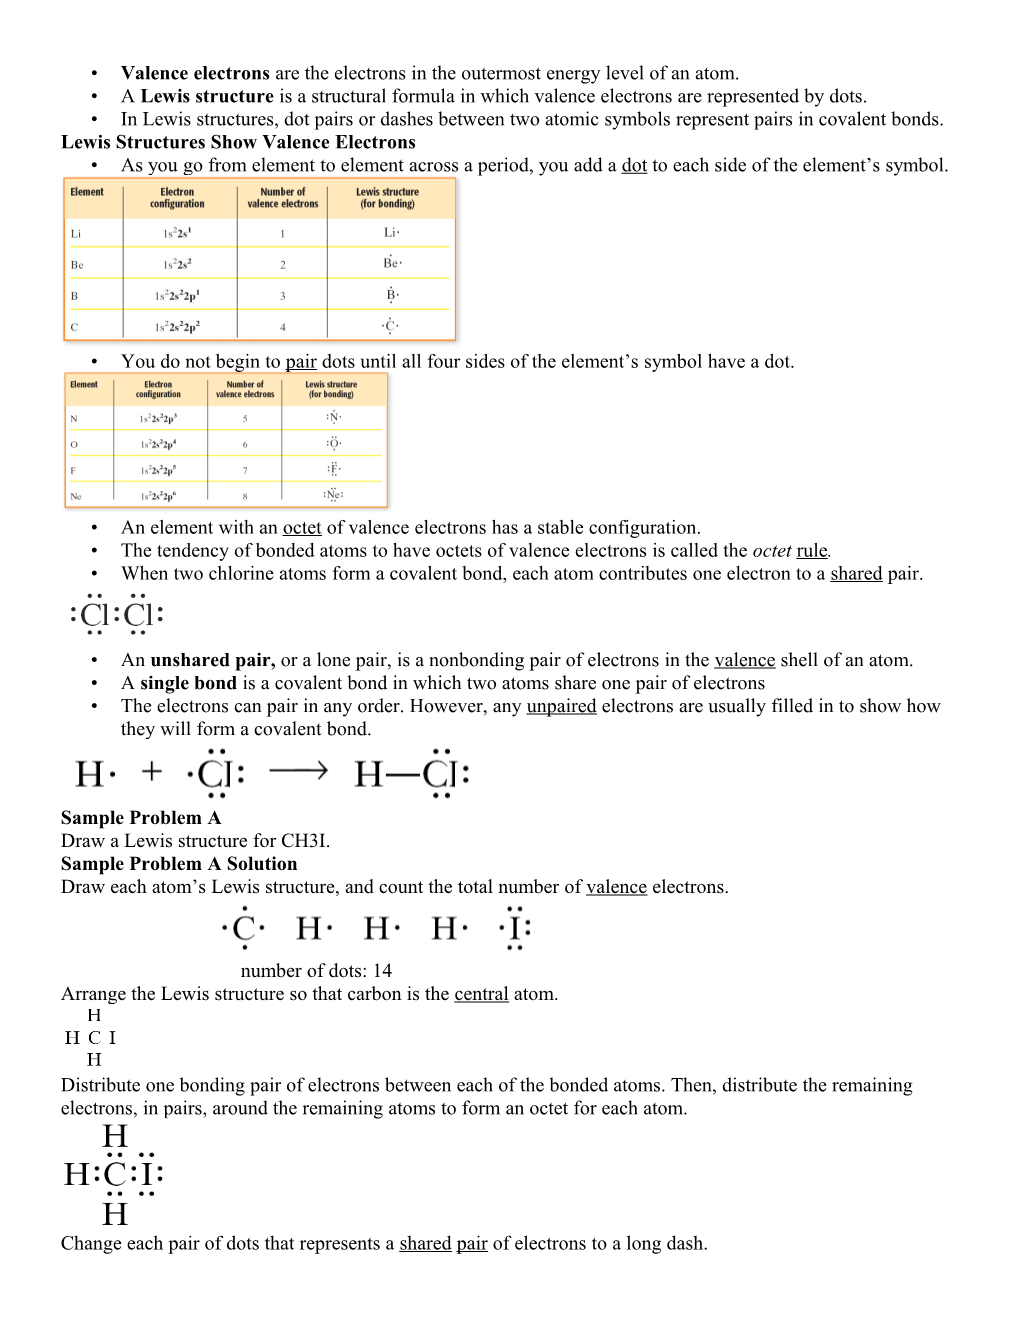 Chapter 6 Section 1 Covalent Bonds